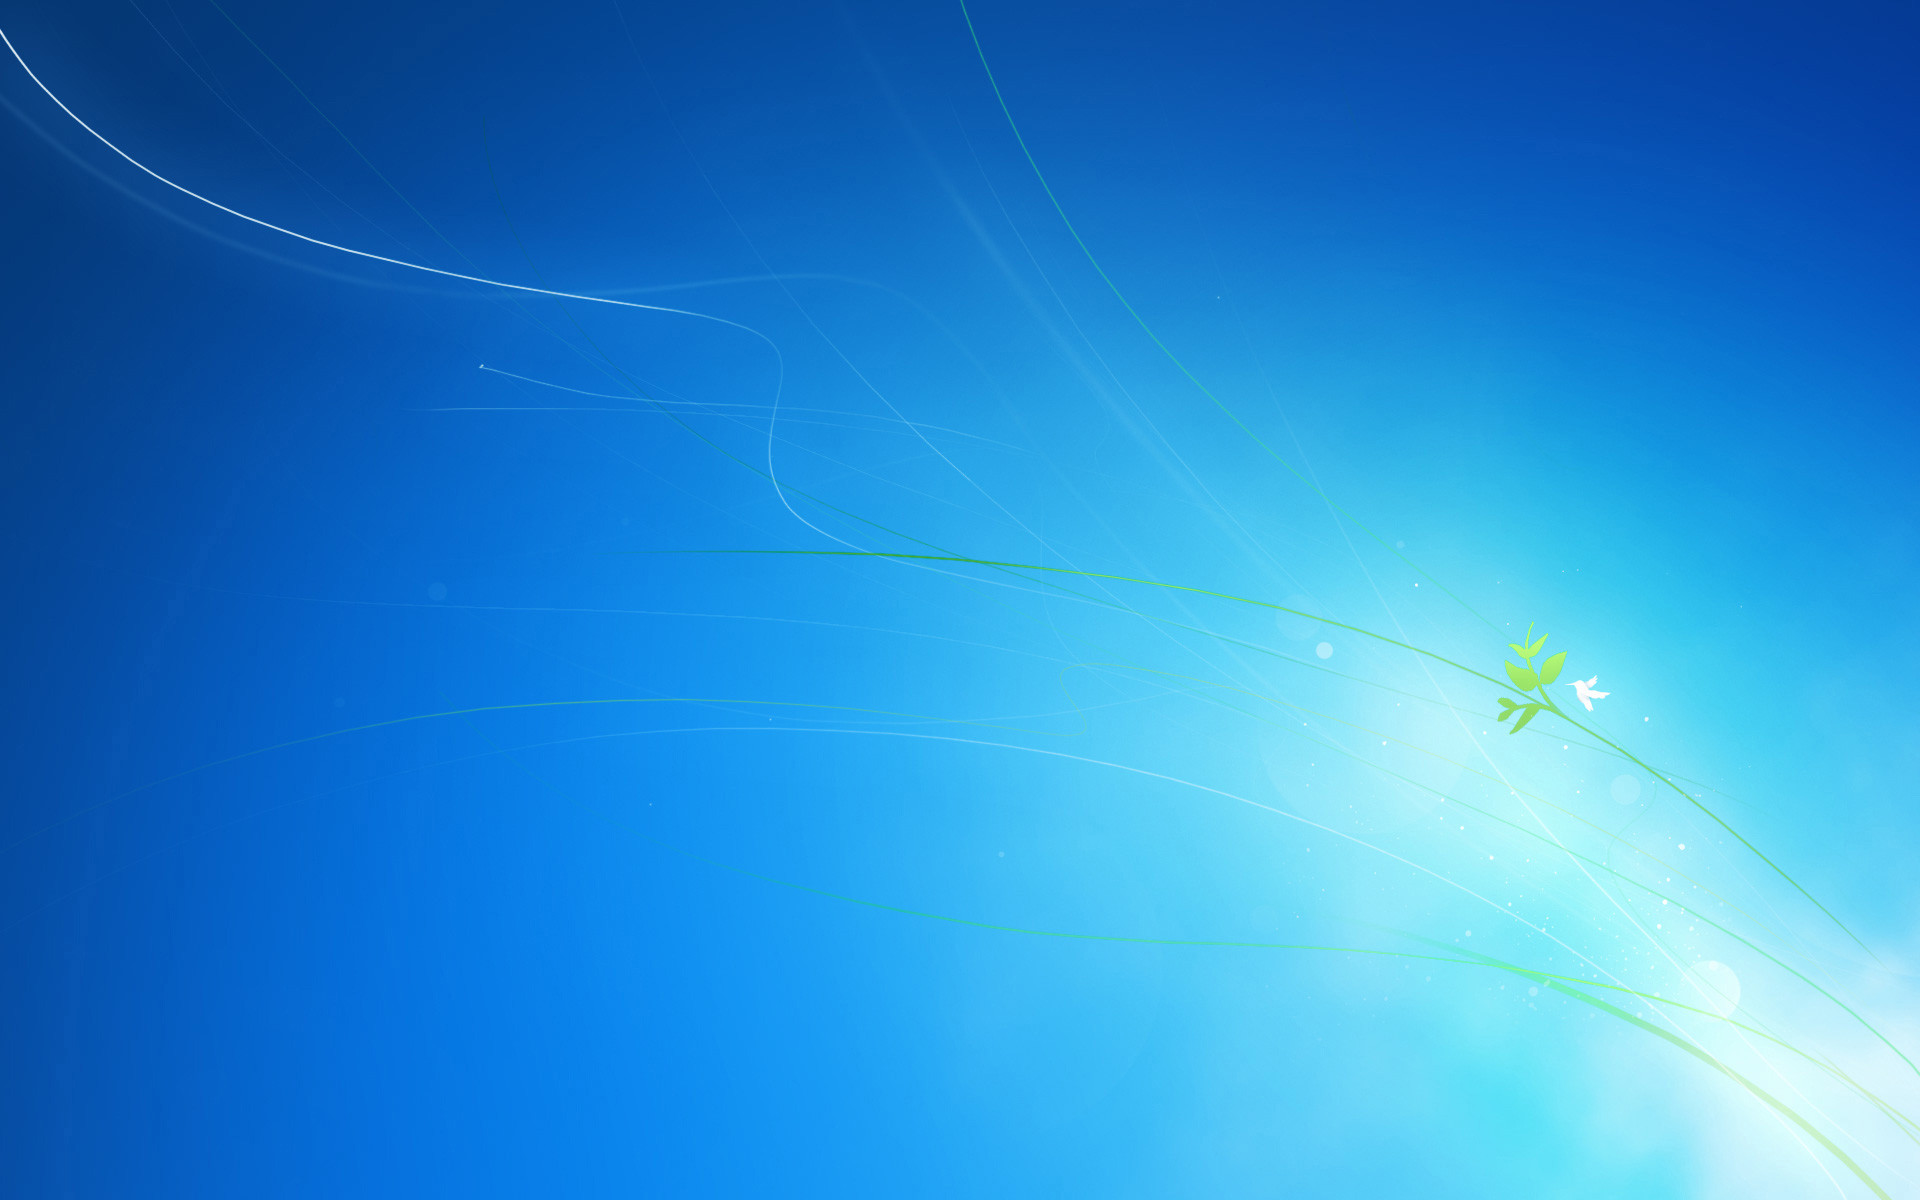 Windows 7: Original default wallpaper (2009)